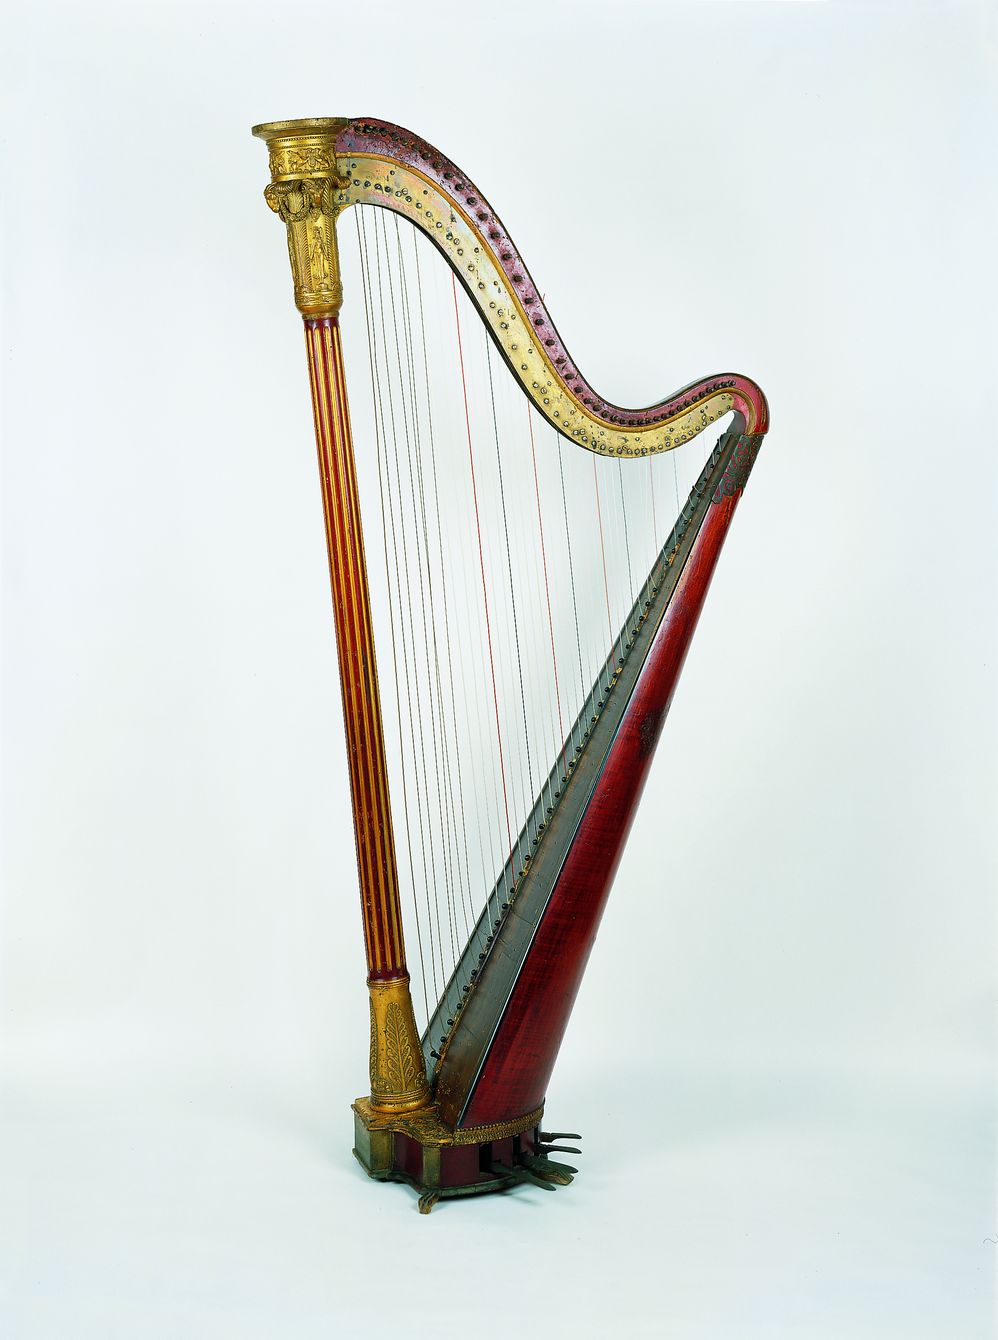 File:Erard Frères. Harp. Paris, 1800-1830.jpg - Wikimedia Commons